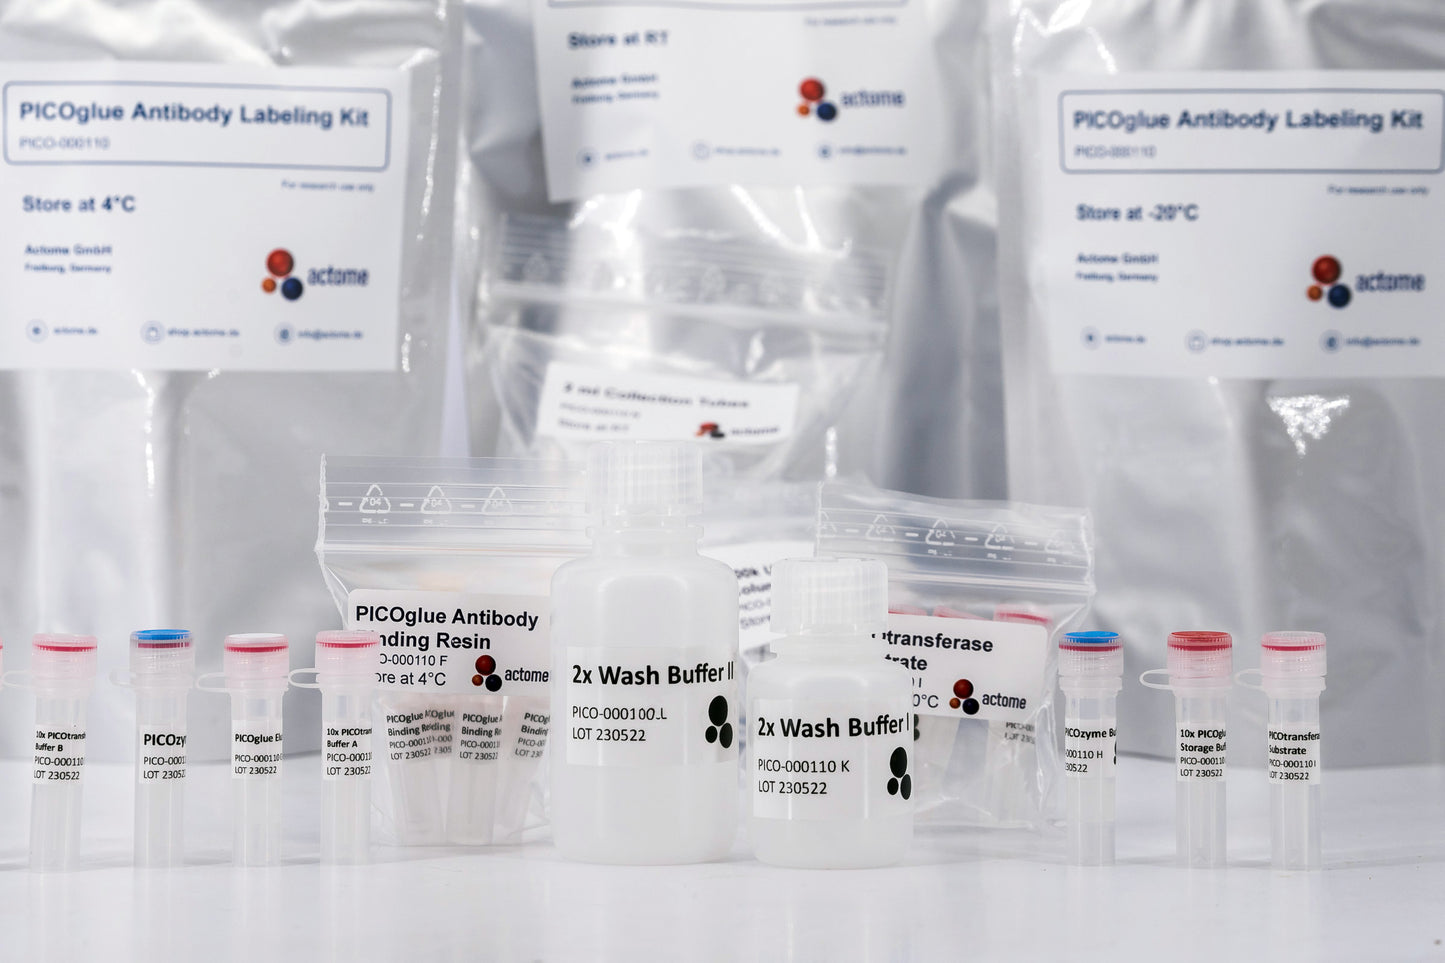 PICOglue Antibody Labeling Kit